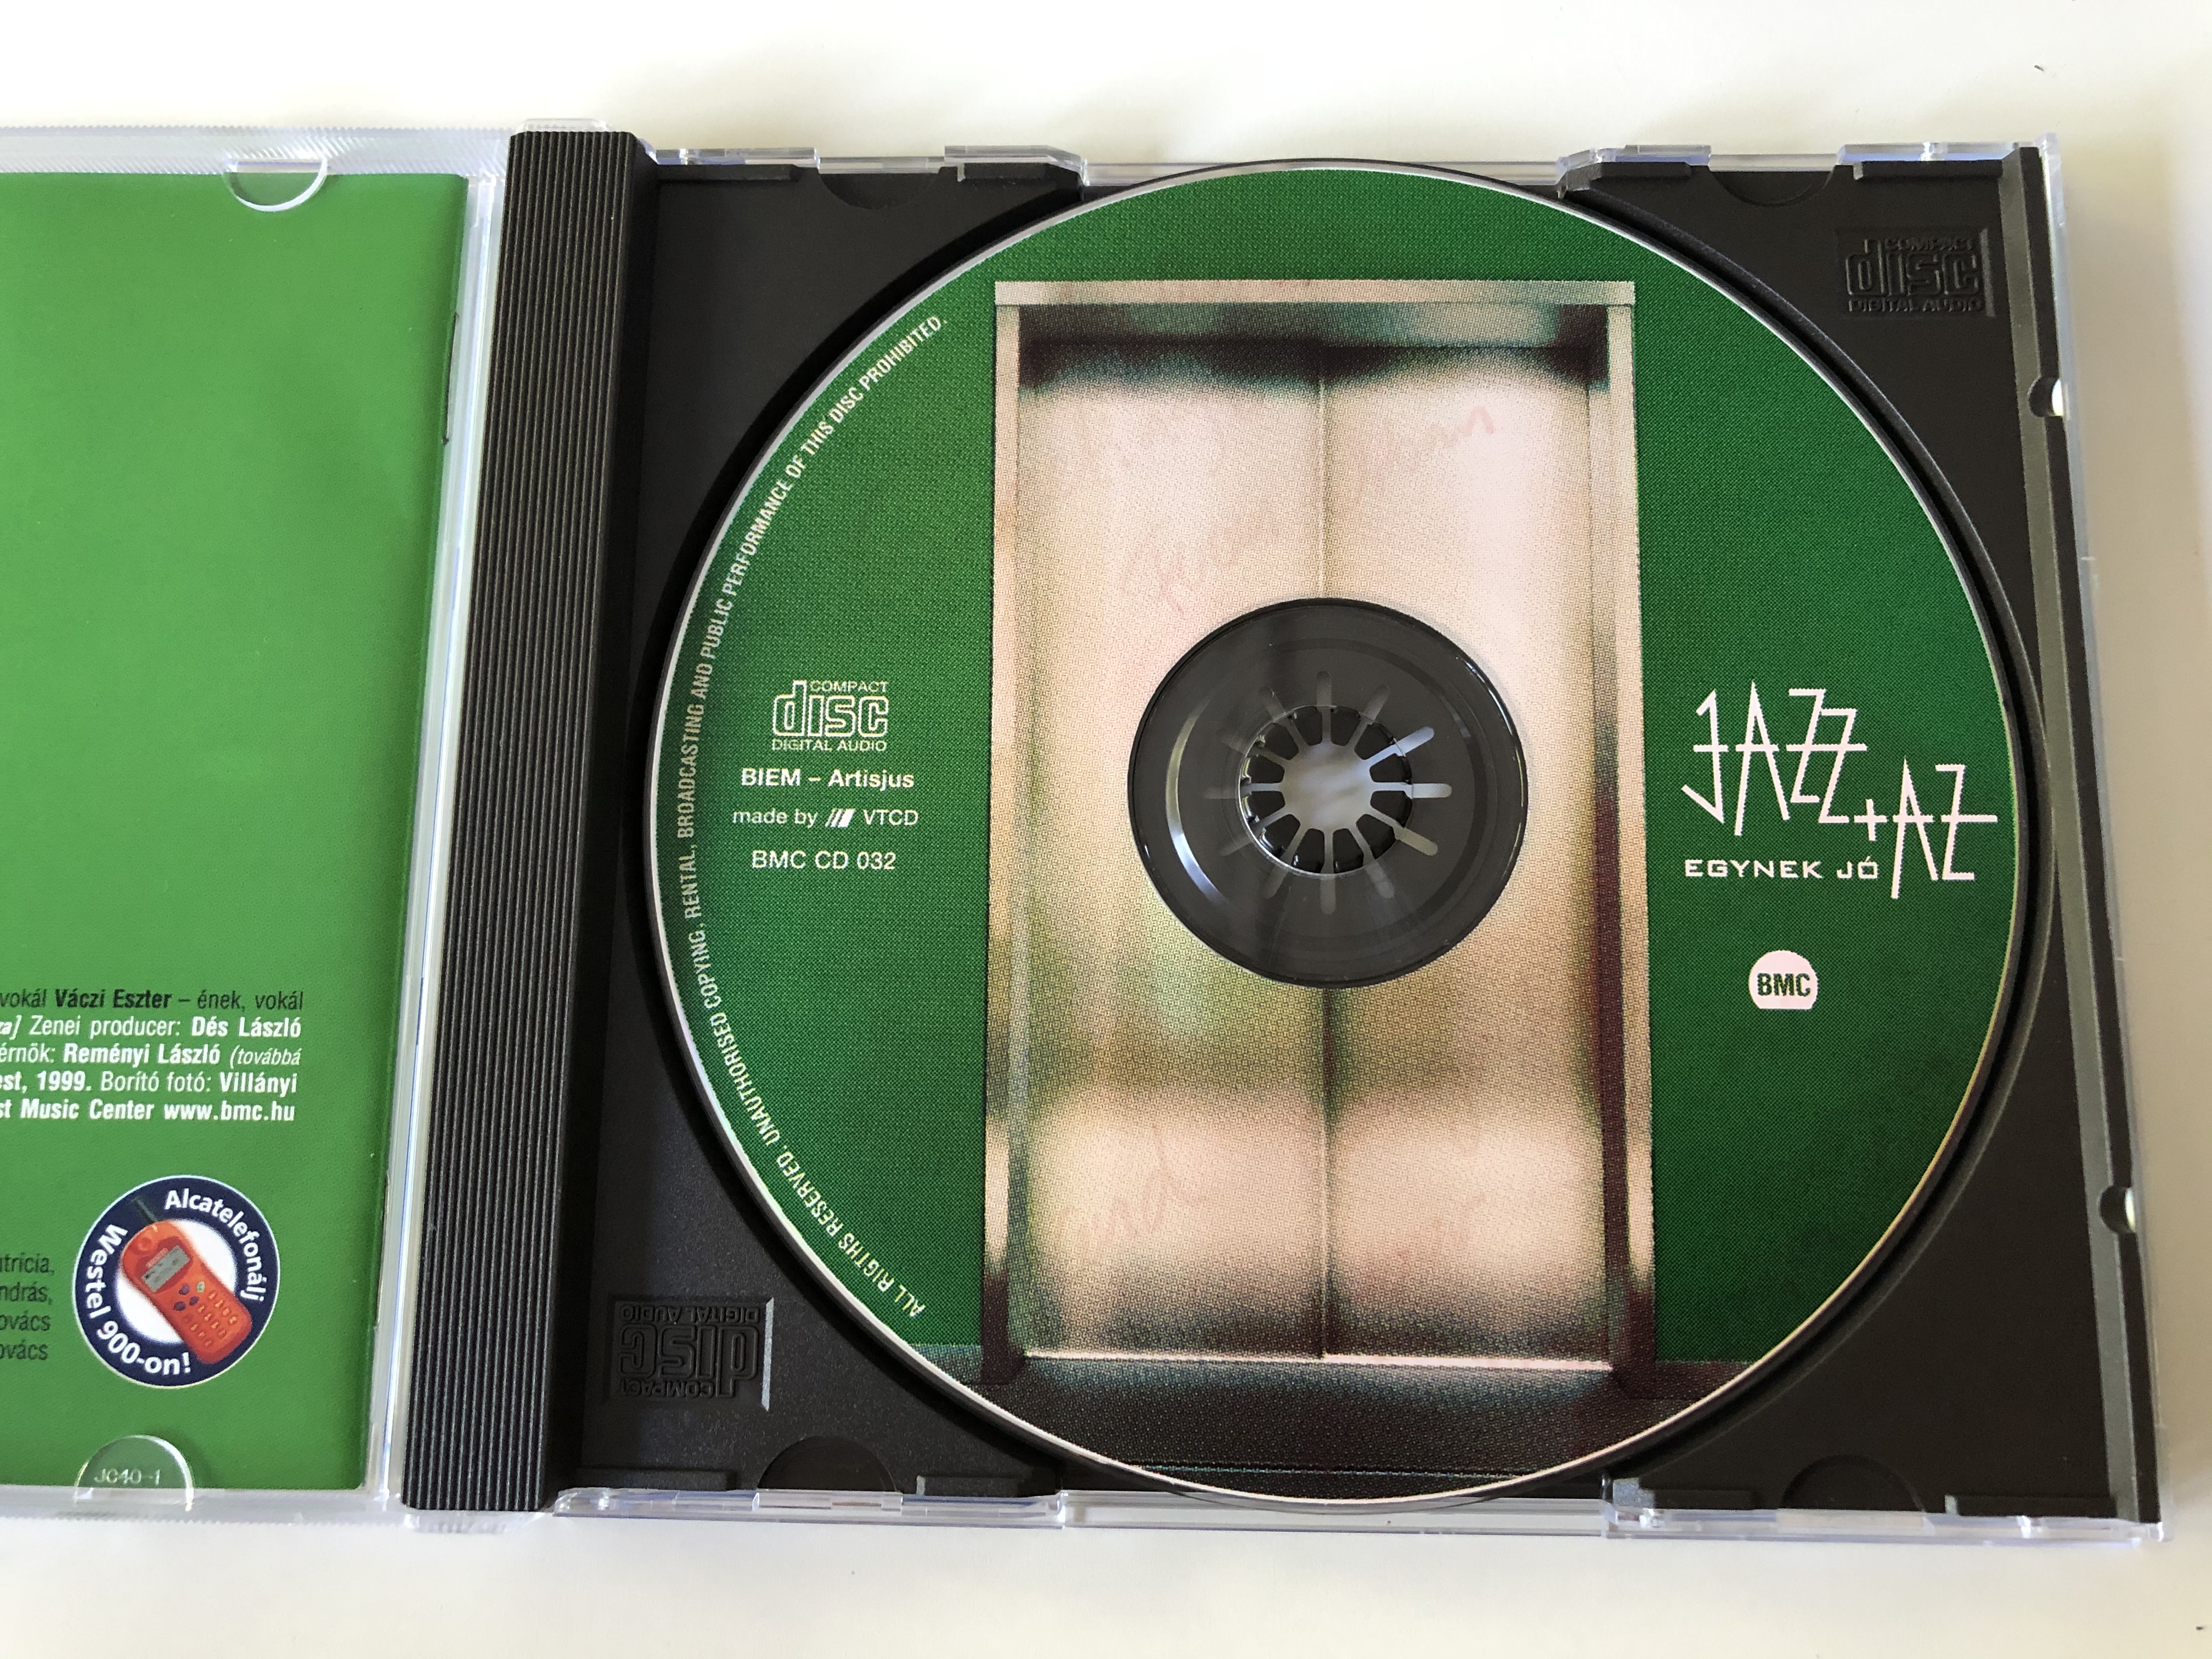 jazz-az-egynek-j-budapest-music-center-records-audio-cd-1999-bmc-cd-032-10-.jpg